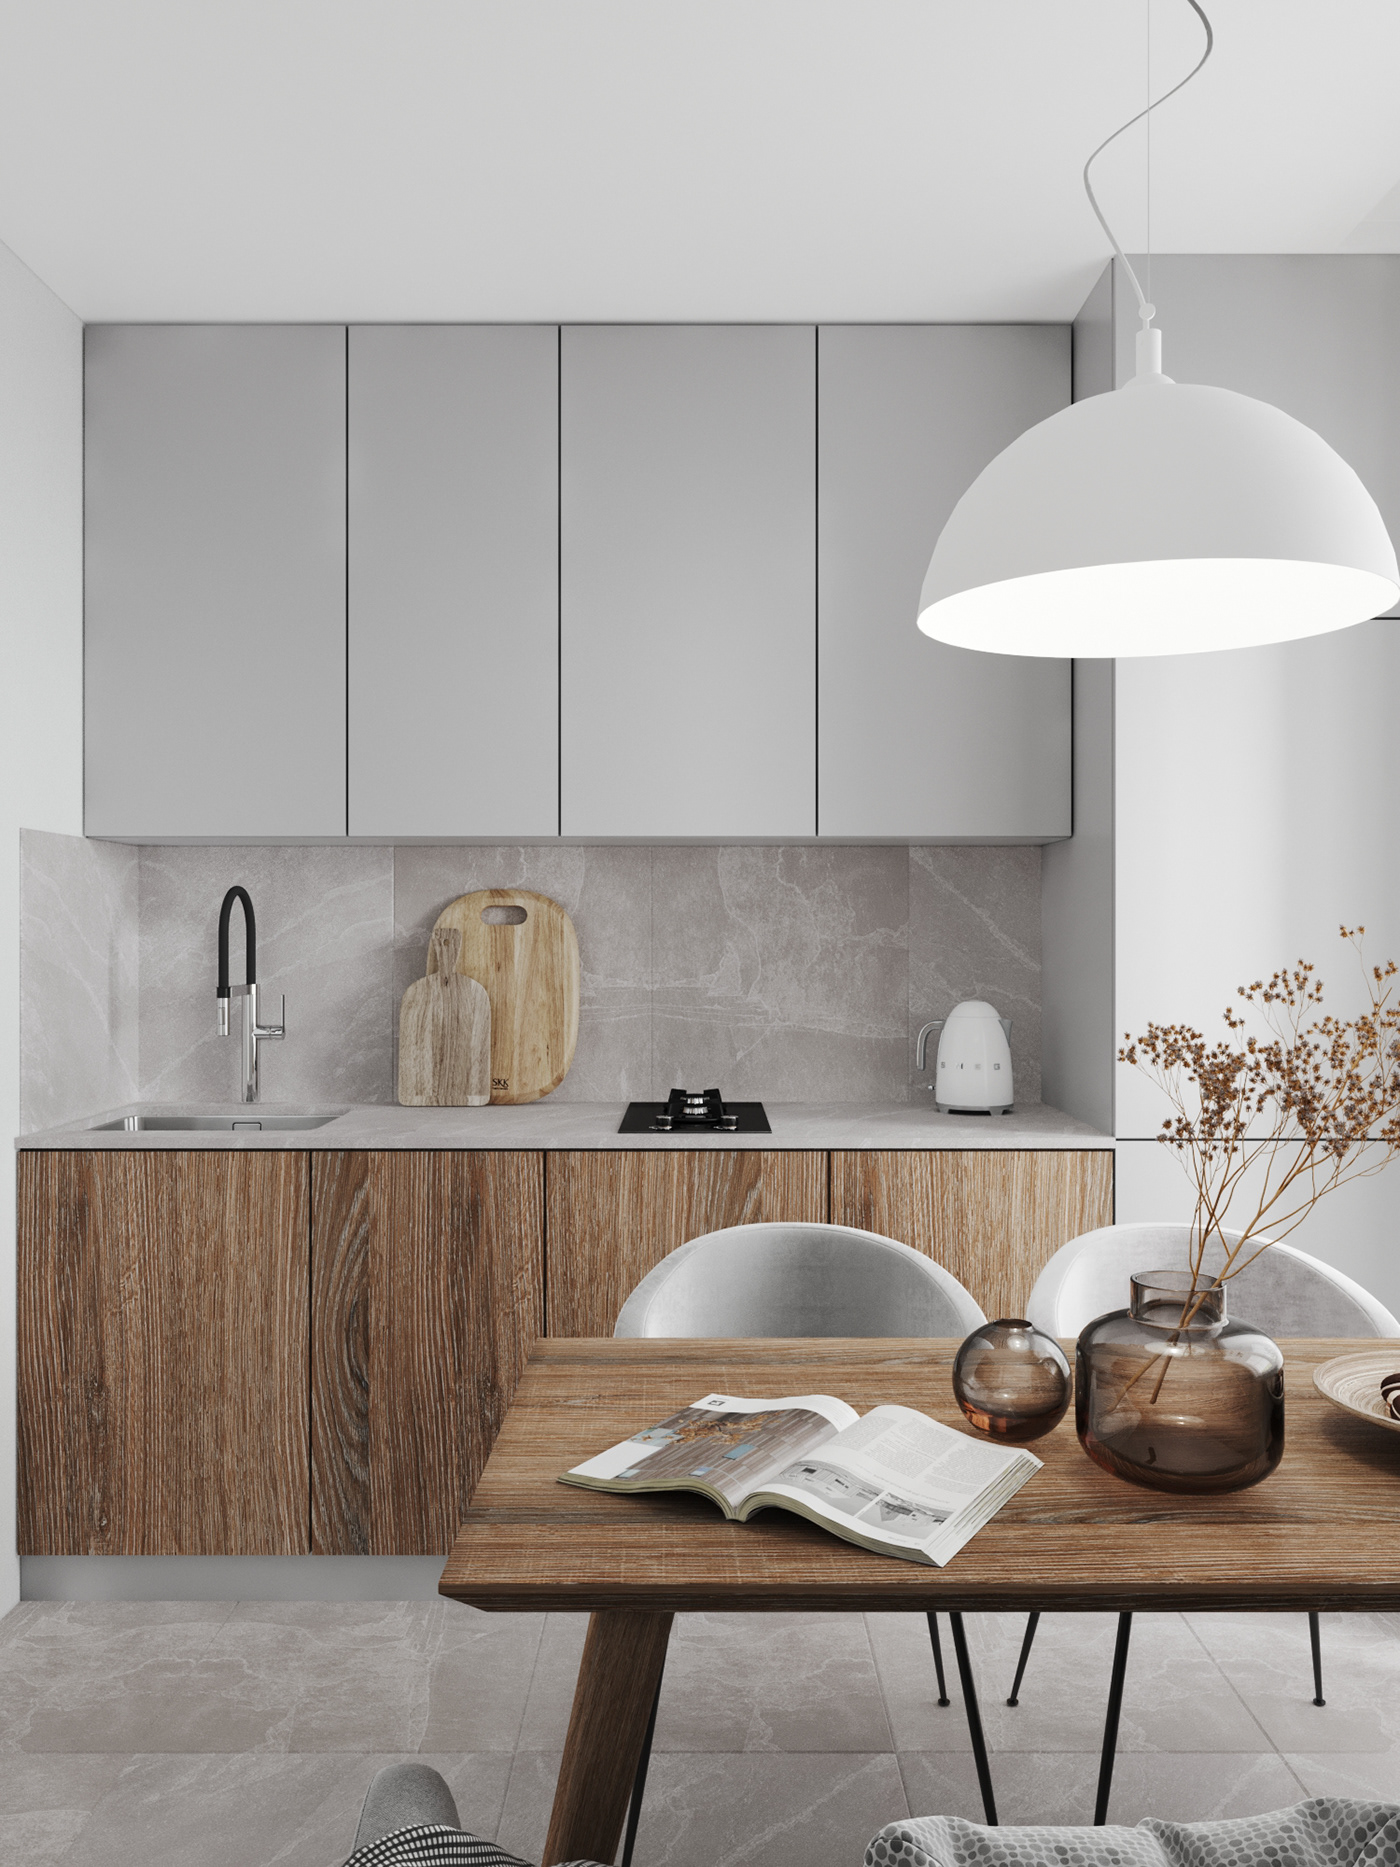 3dmax 3ds max corona render  greykitchen interior design  kitchen kitchen design KitchenVisualization Render visualization